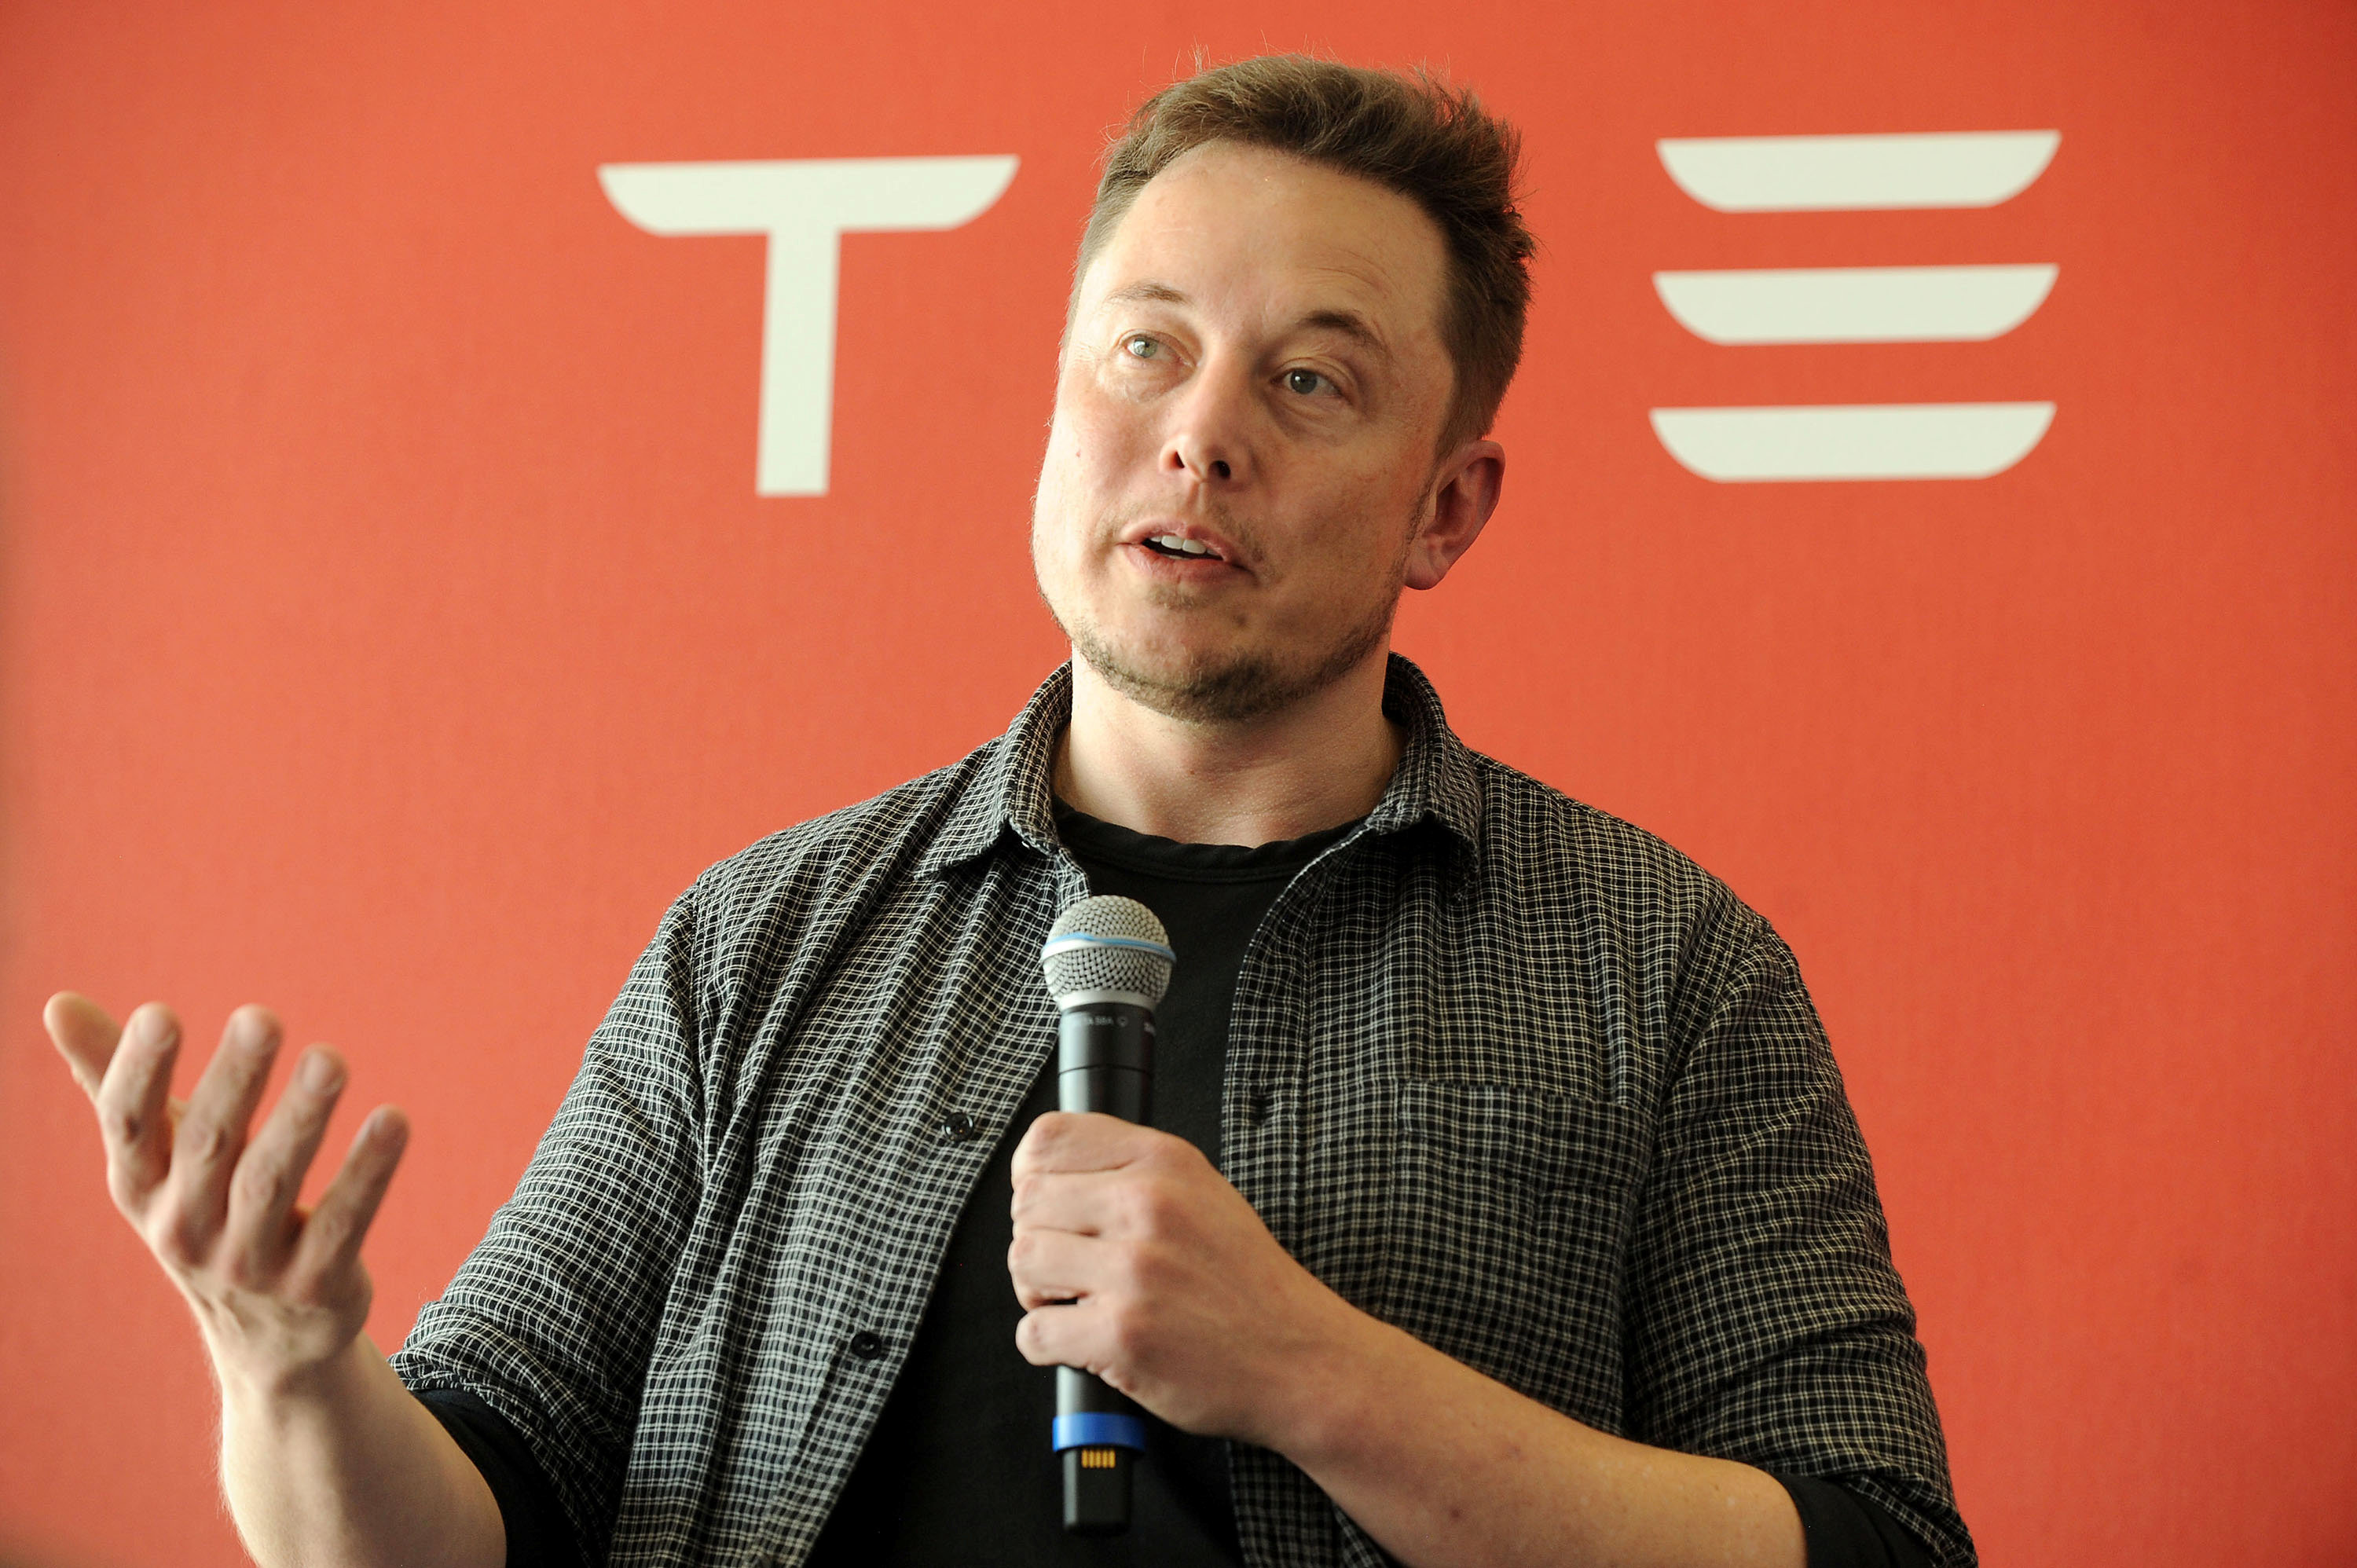 Acusan a Elon Musk de fraude por anunciar en Twitter que Tesla saldría de la Bolsa